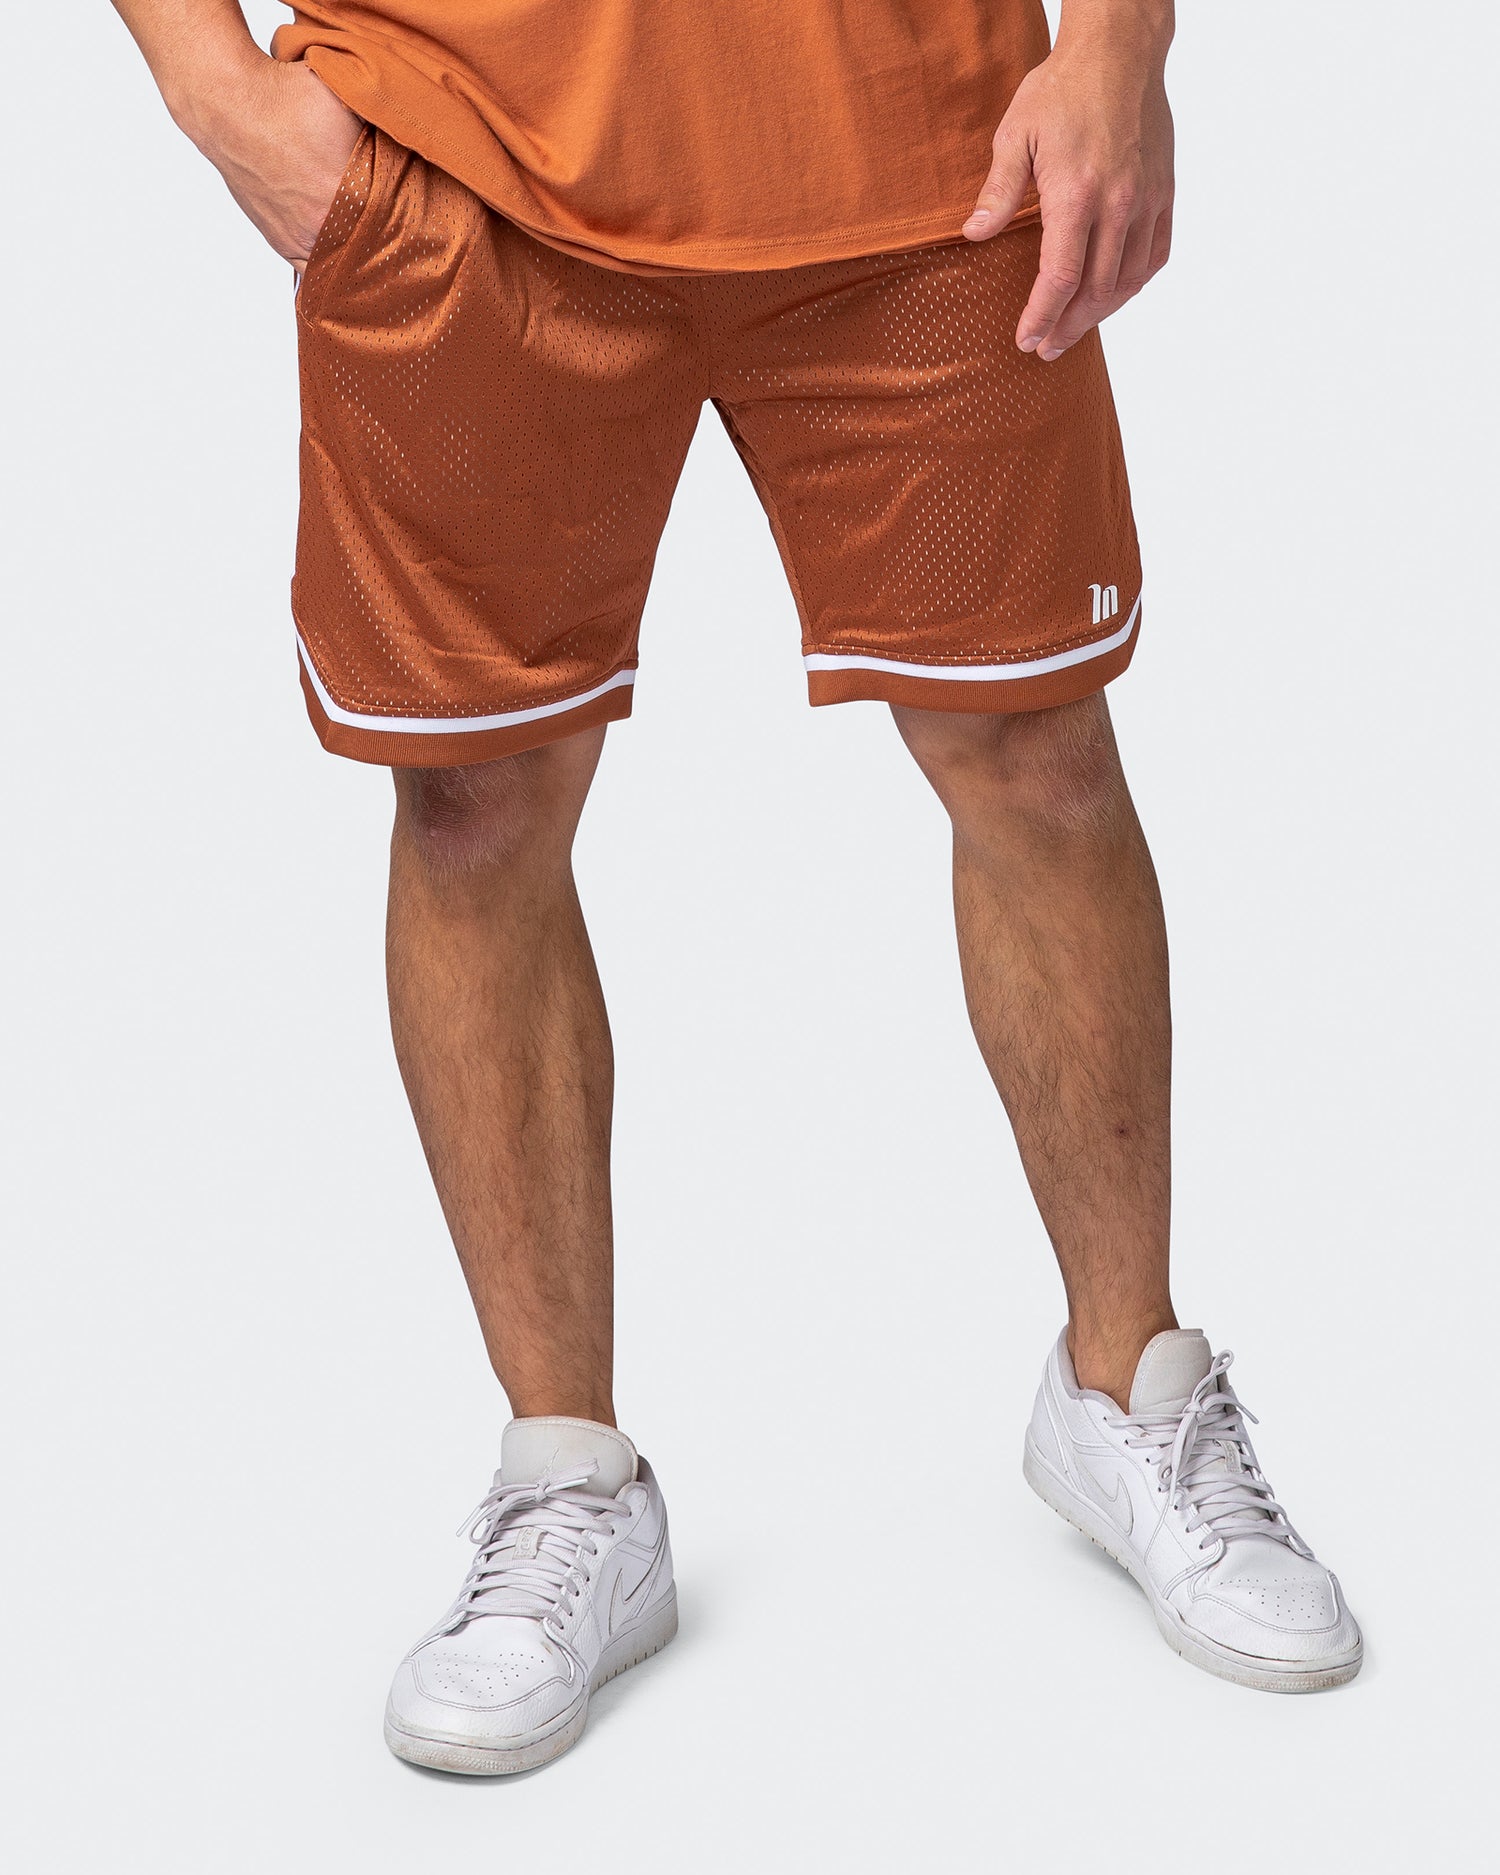 8" Basketball Shorts - Sandstone